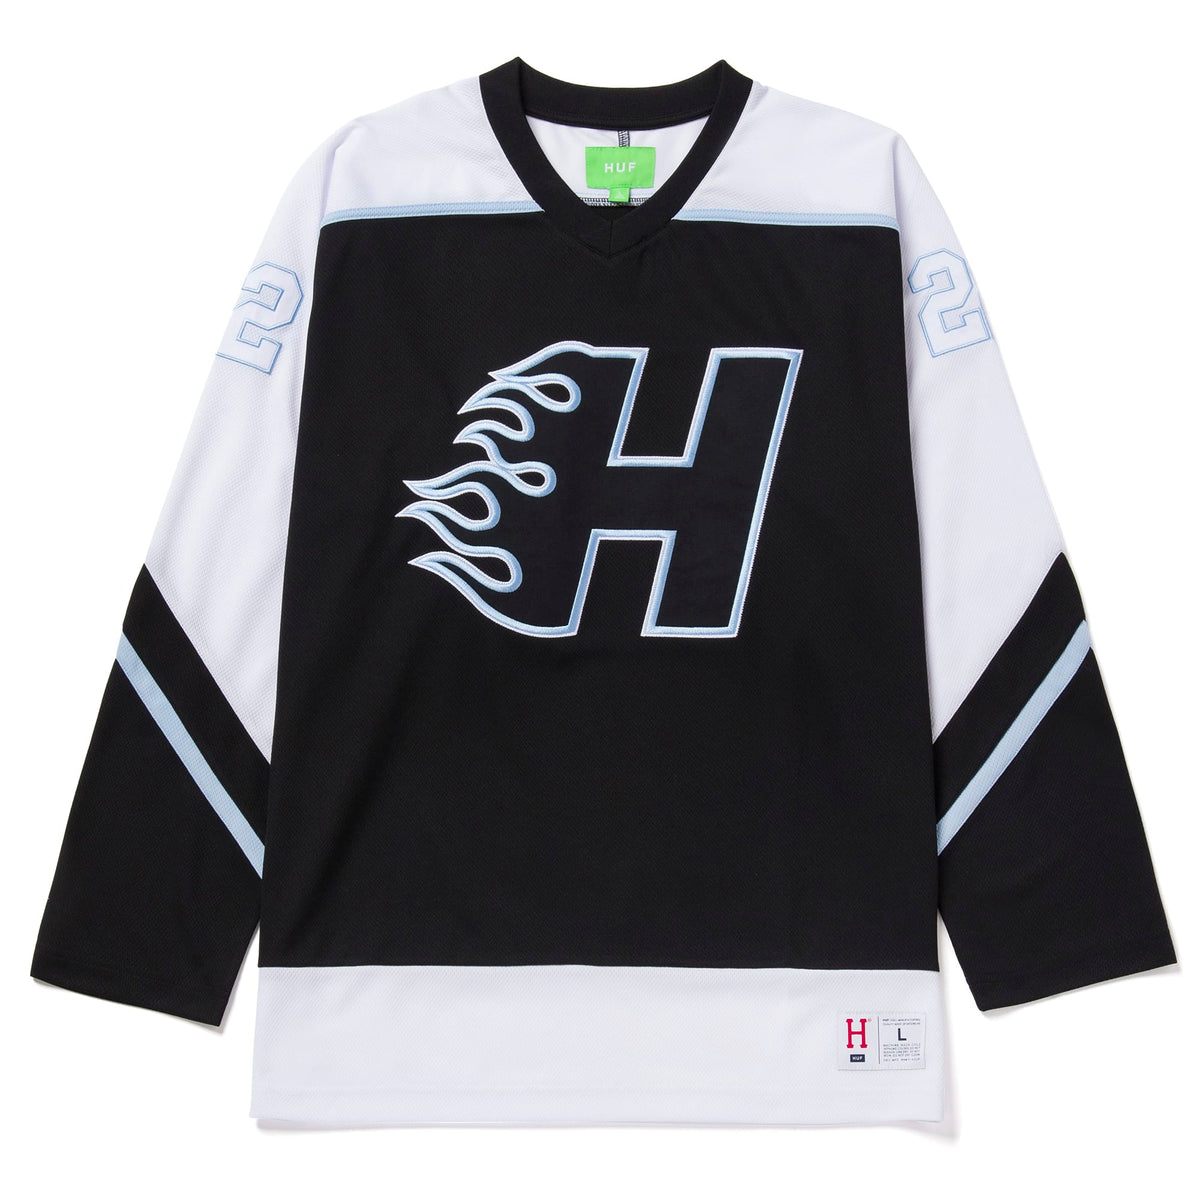 Huf Enforcer Hockey Jersey - White